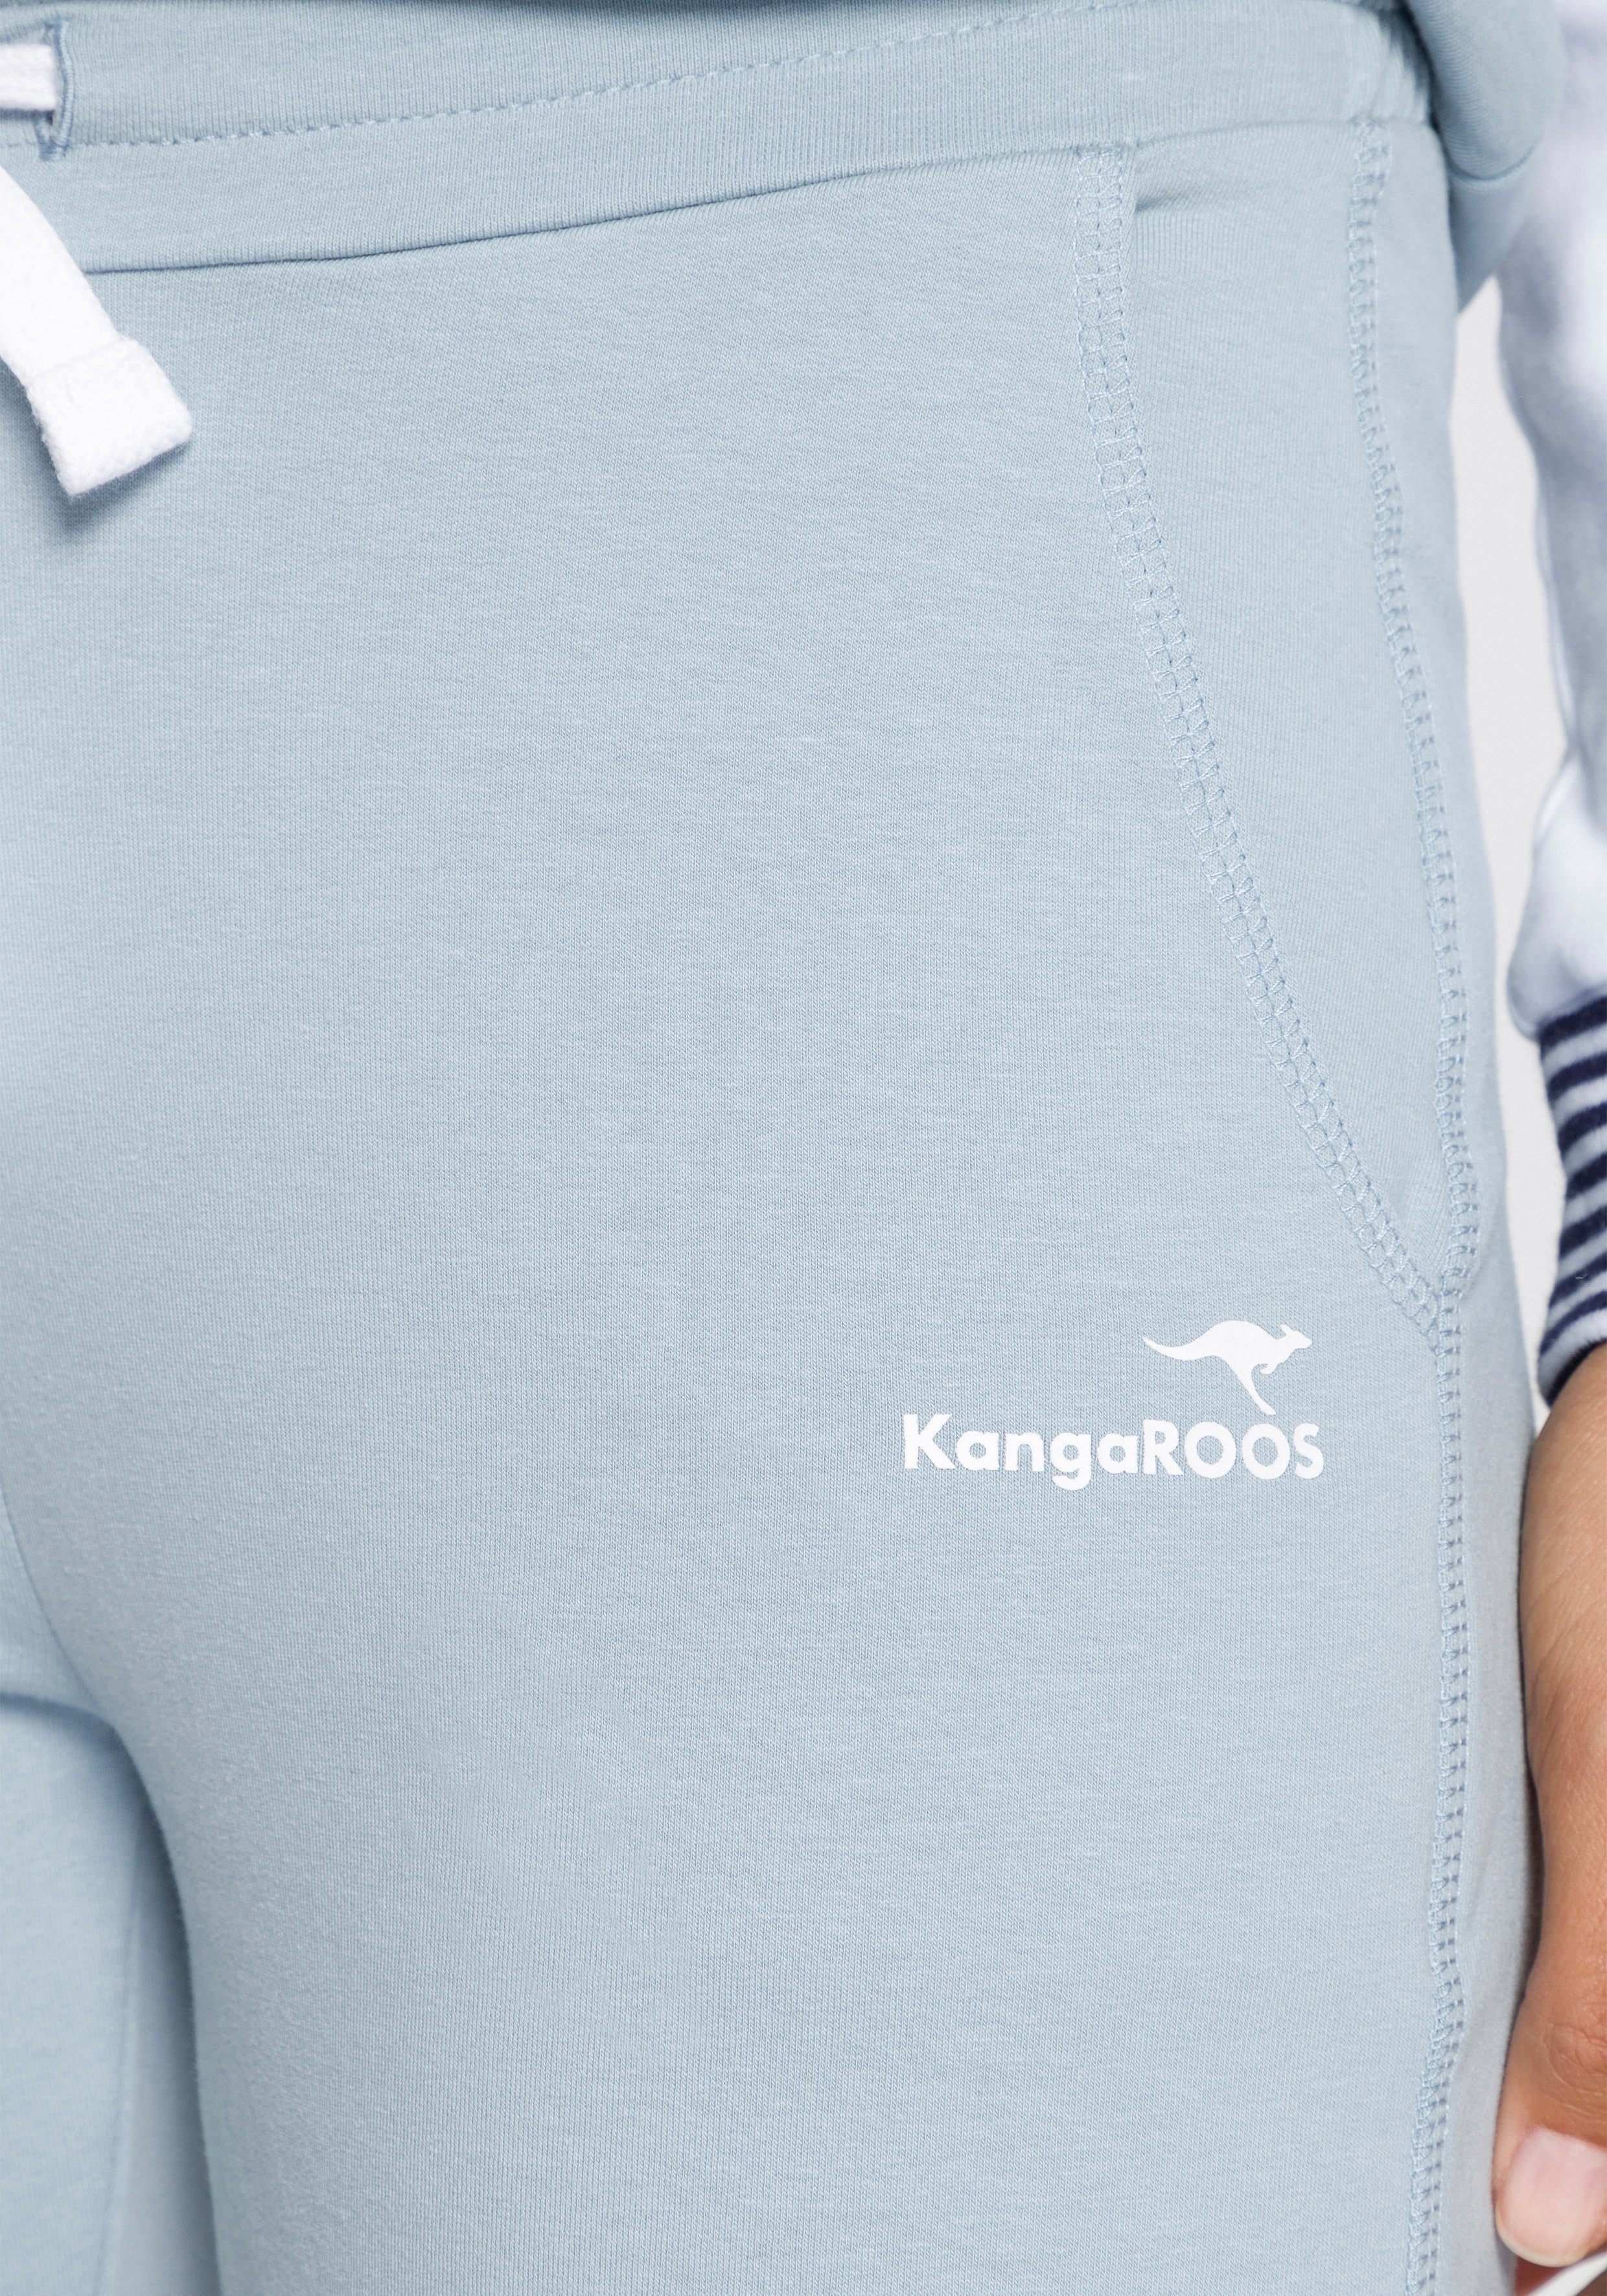 KangaROOS Jogginghose in 7/8-Länge mit graublau Logo-Druck